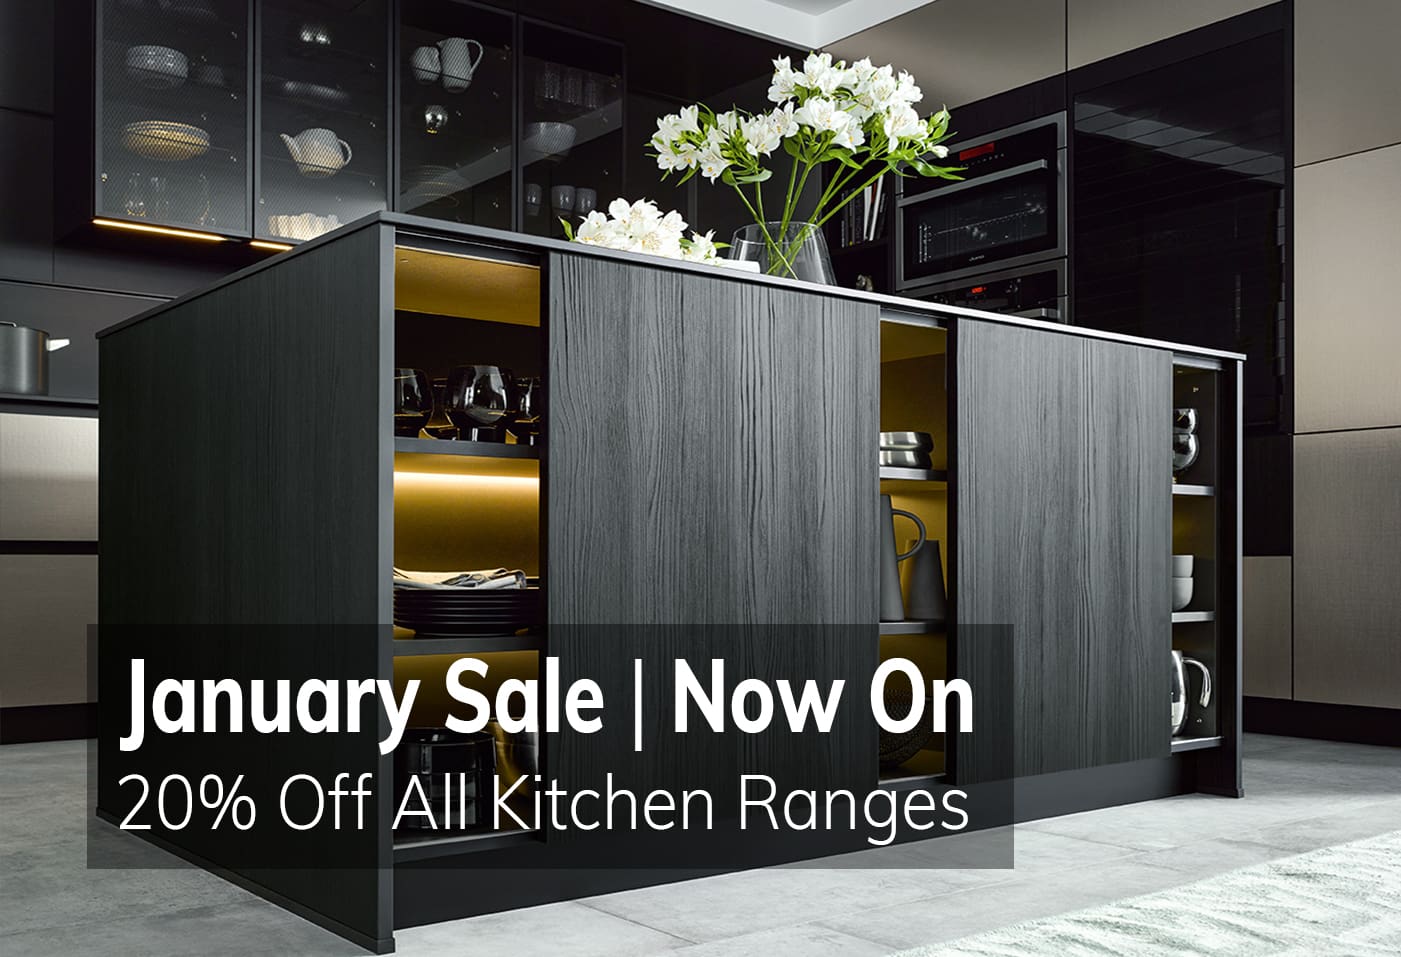 Designer Kitchens Cardiff - January Sale Now On